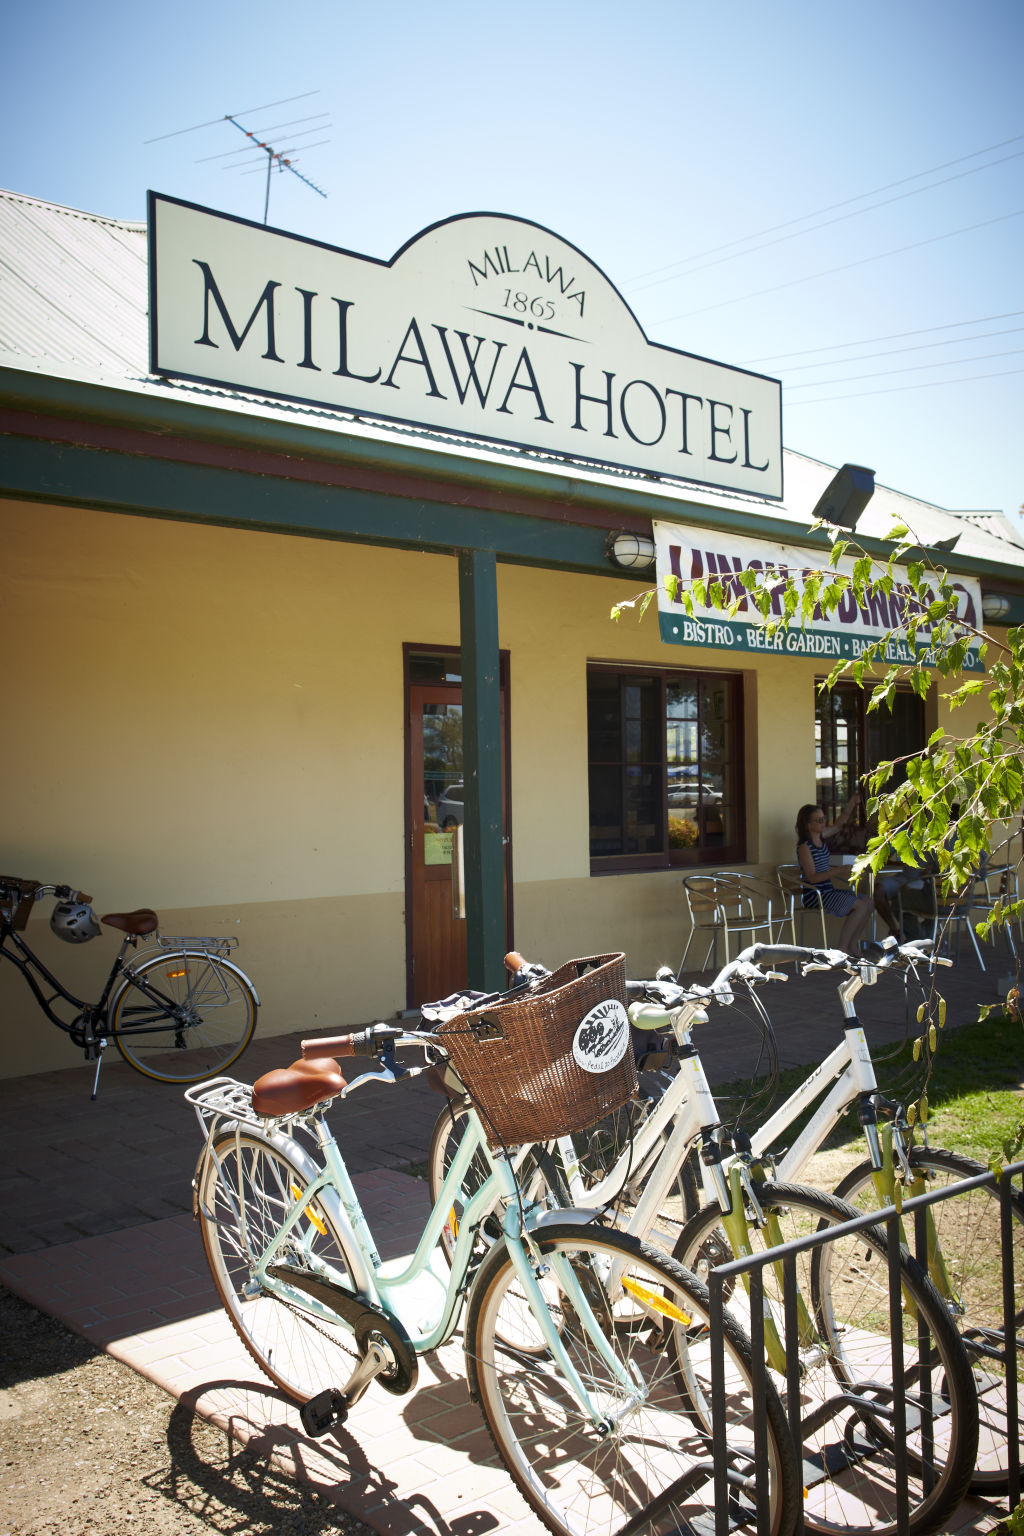 The Milawa Hotel. Photo: Ewen Bell